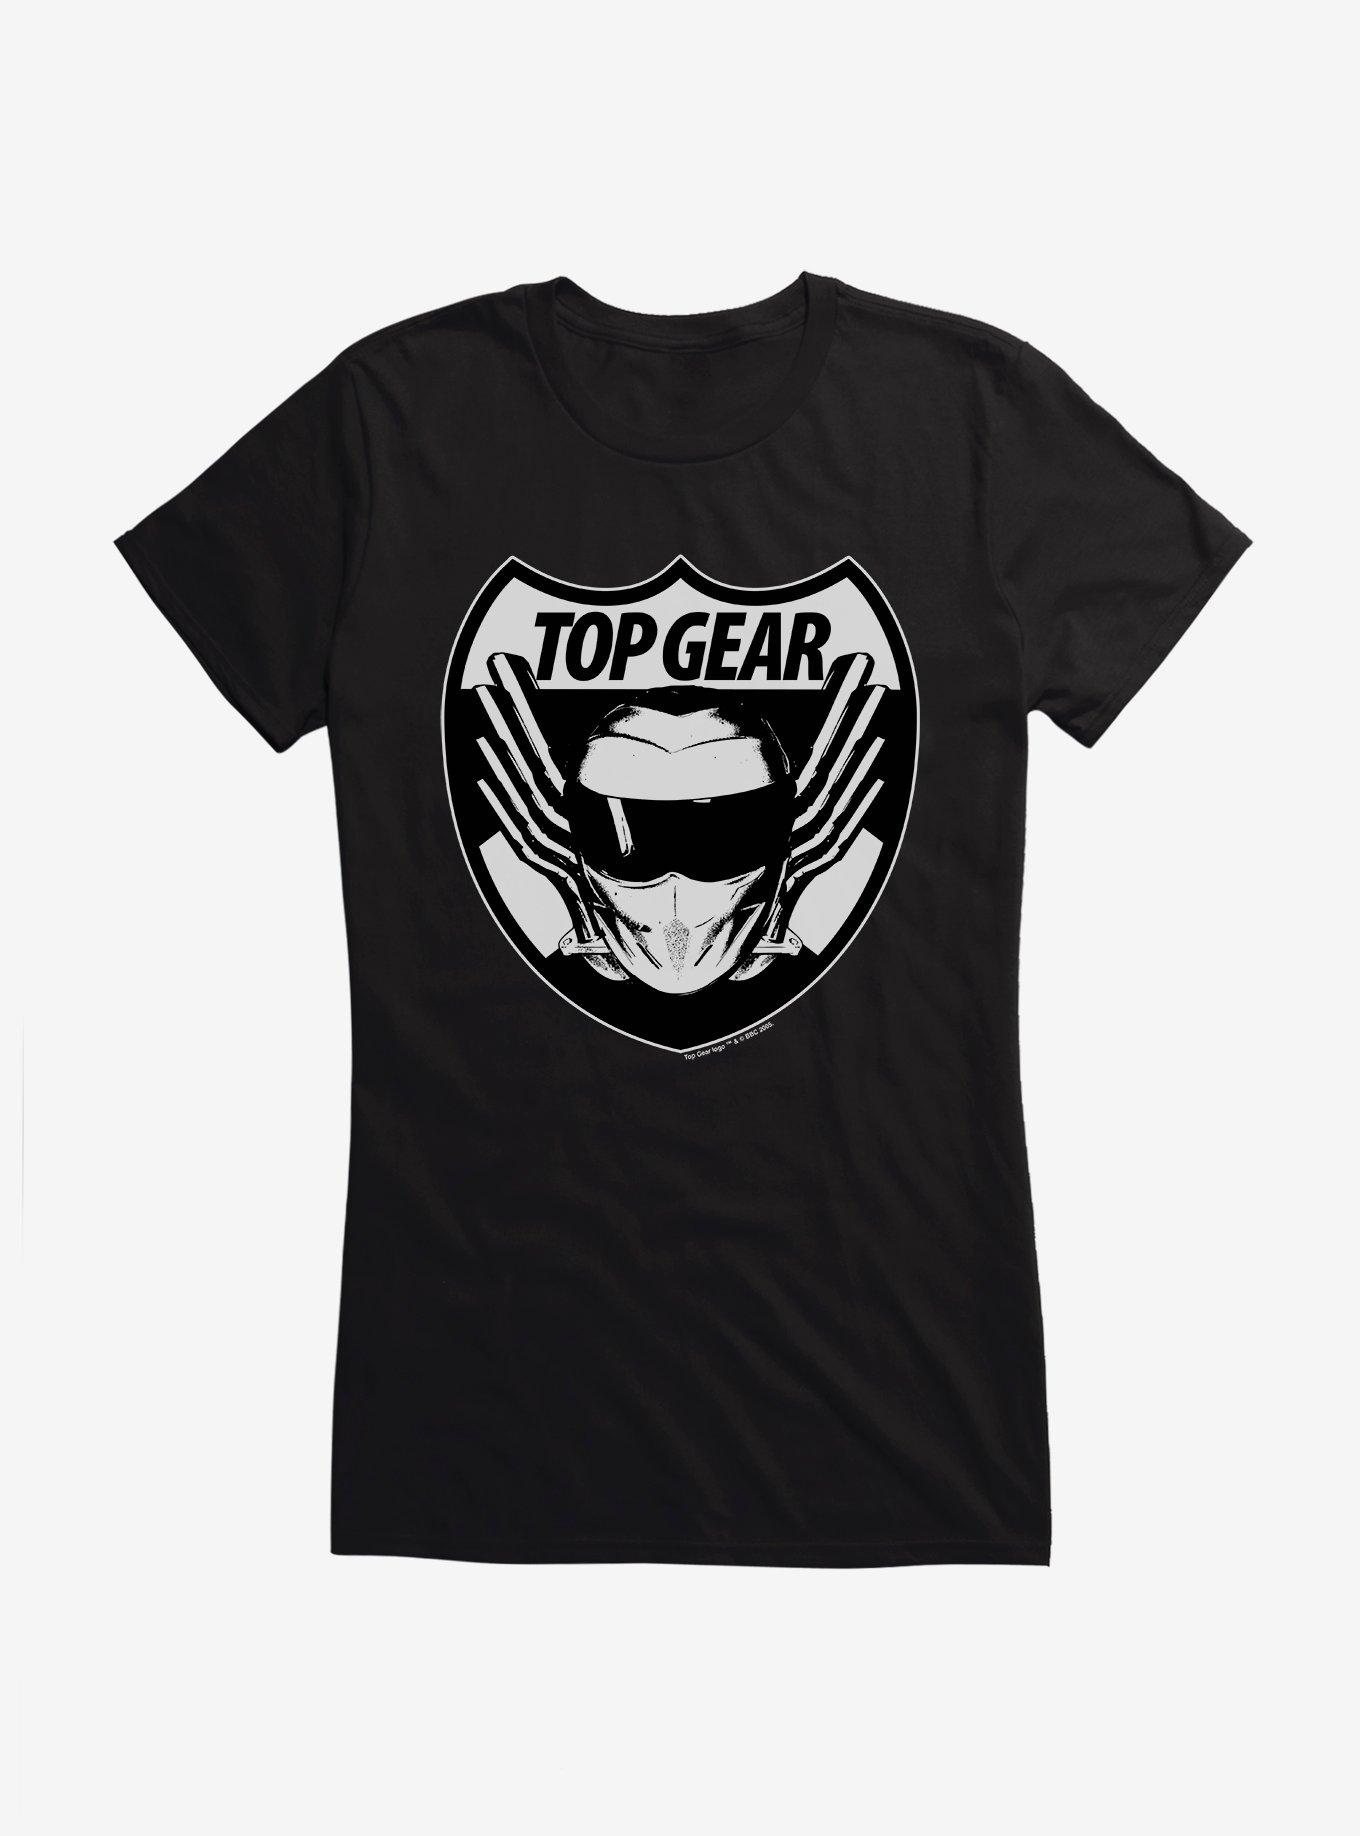 Top Gear Stig Badge Girls T-Shirt